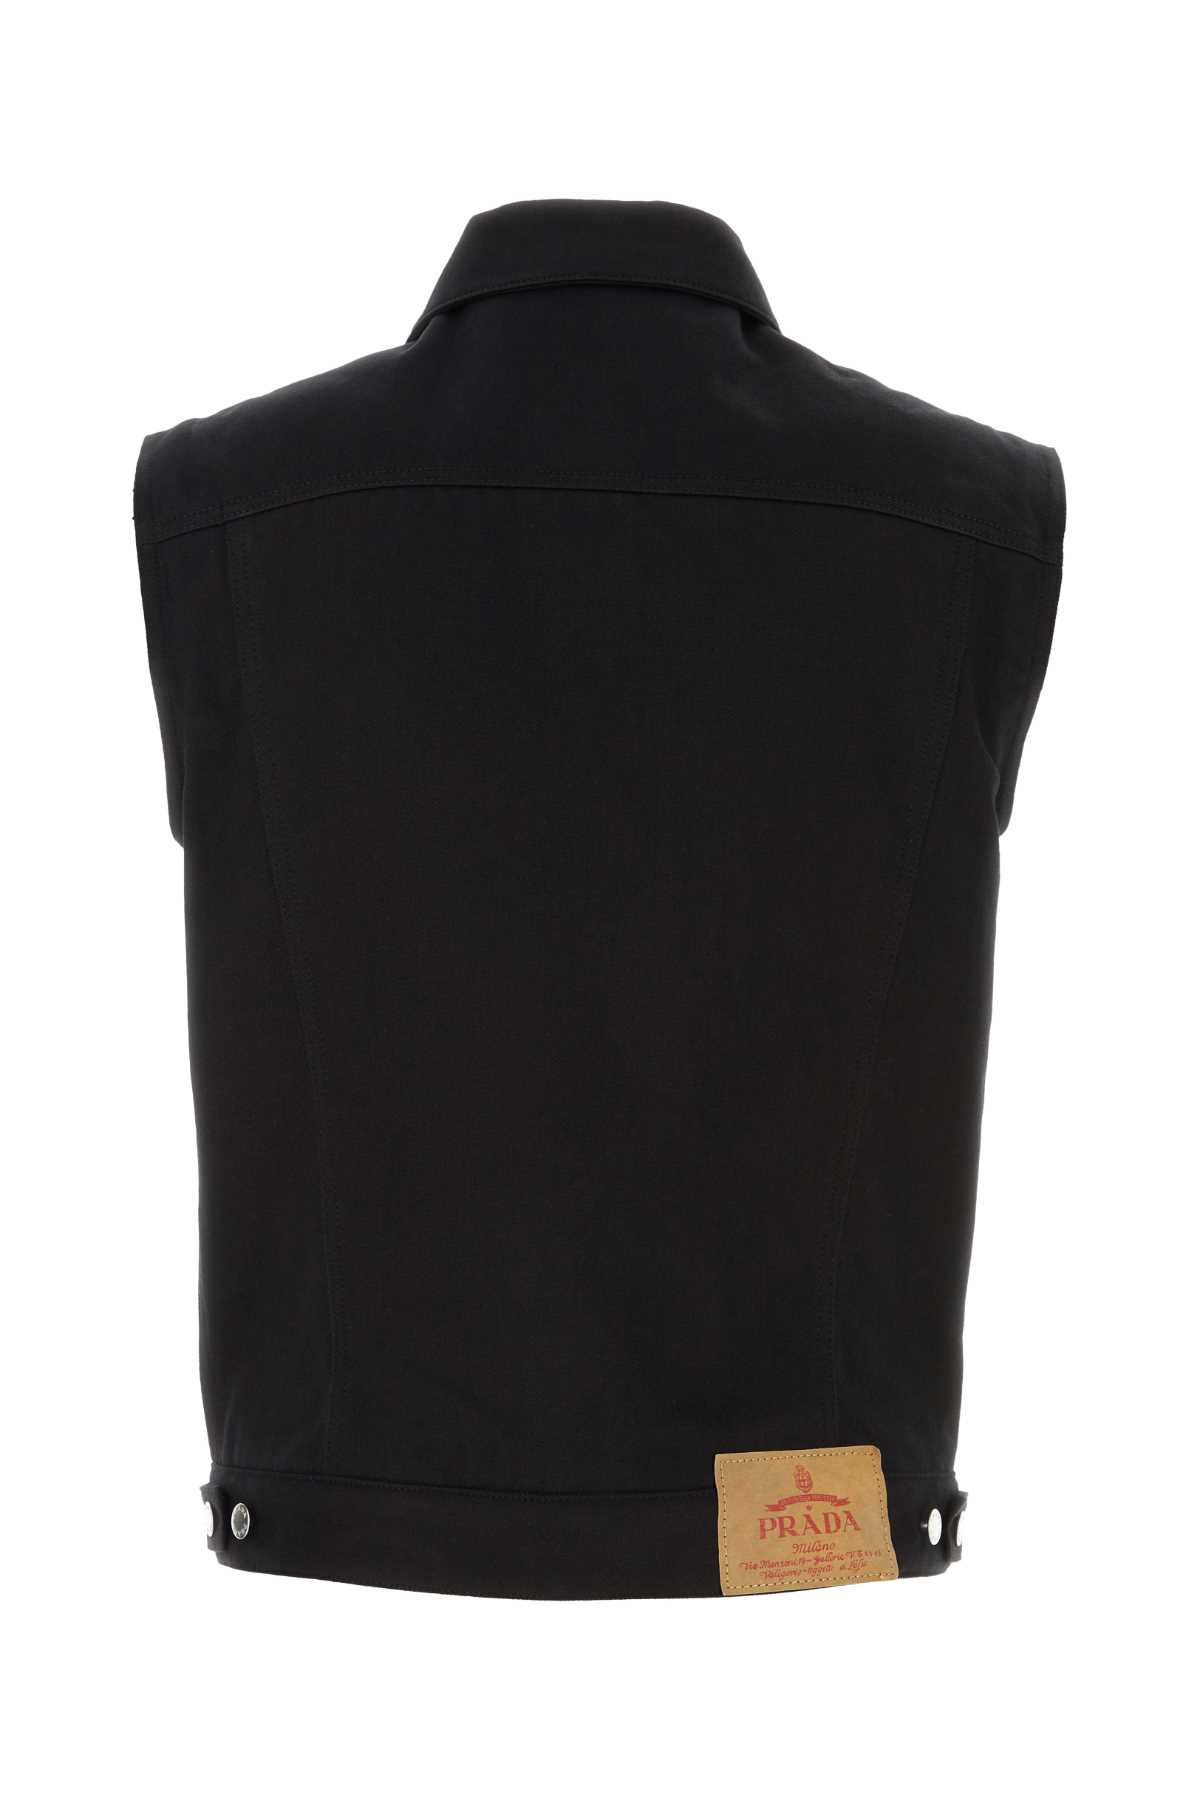 Prada Black Denim Padded Waistcoat